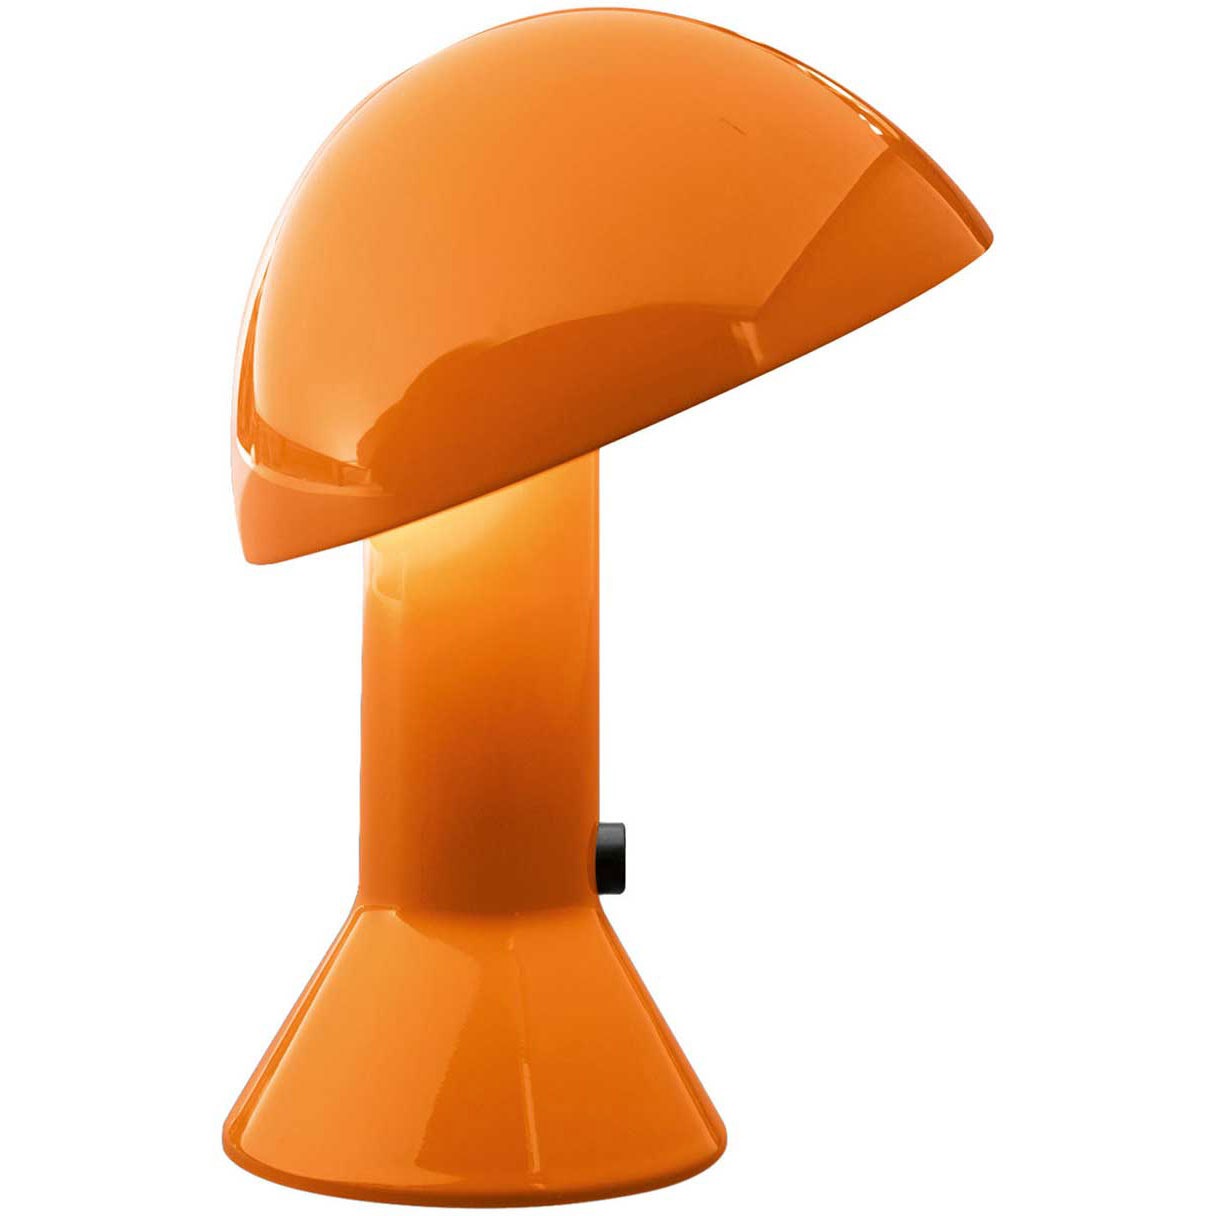 Elmetto Table Lamp, Orange